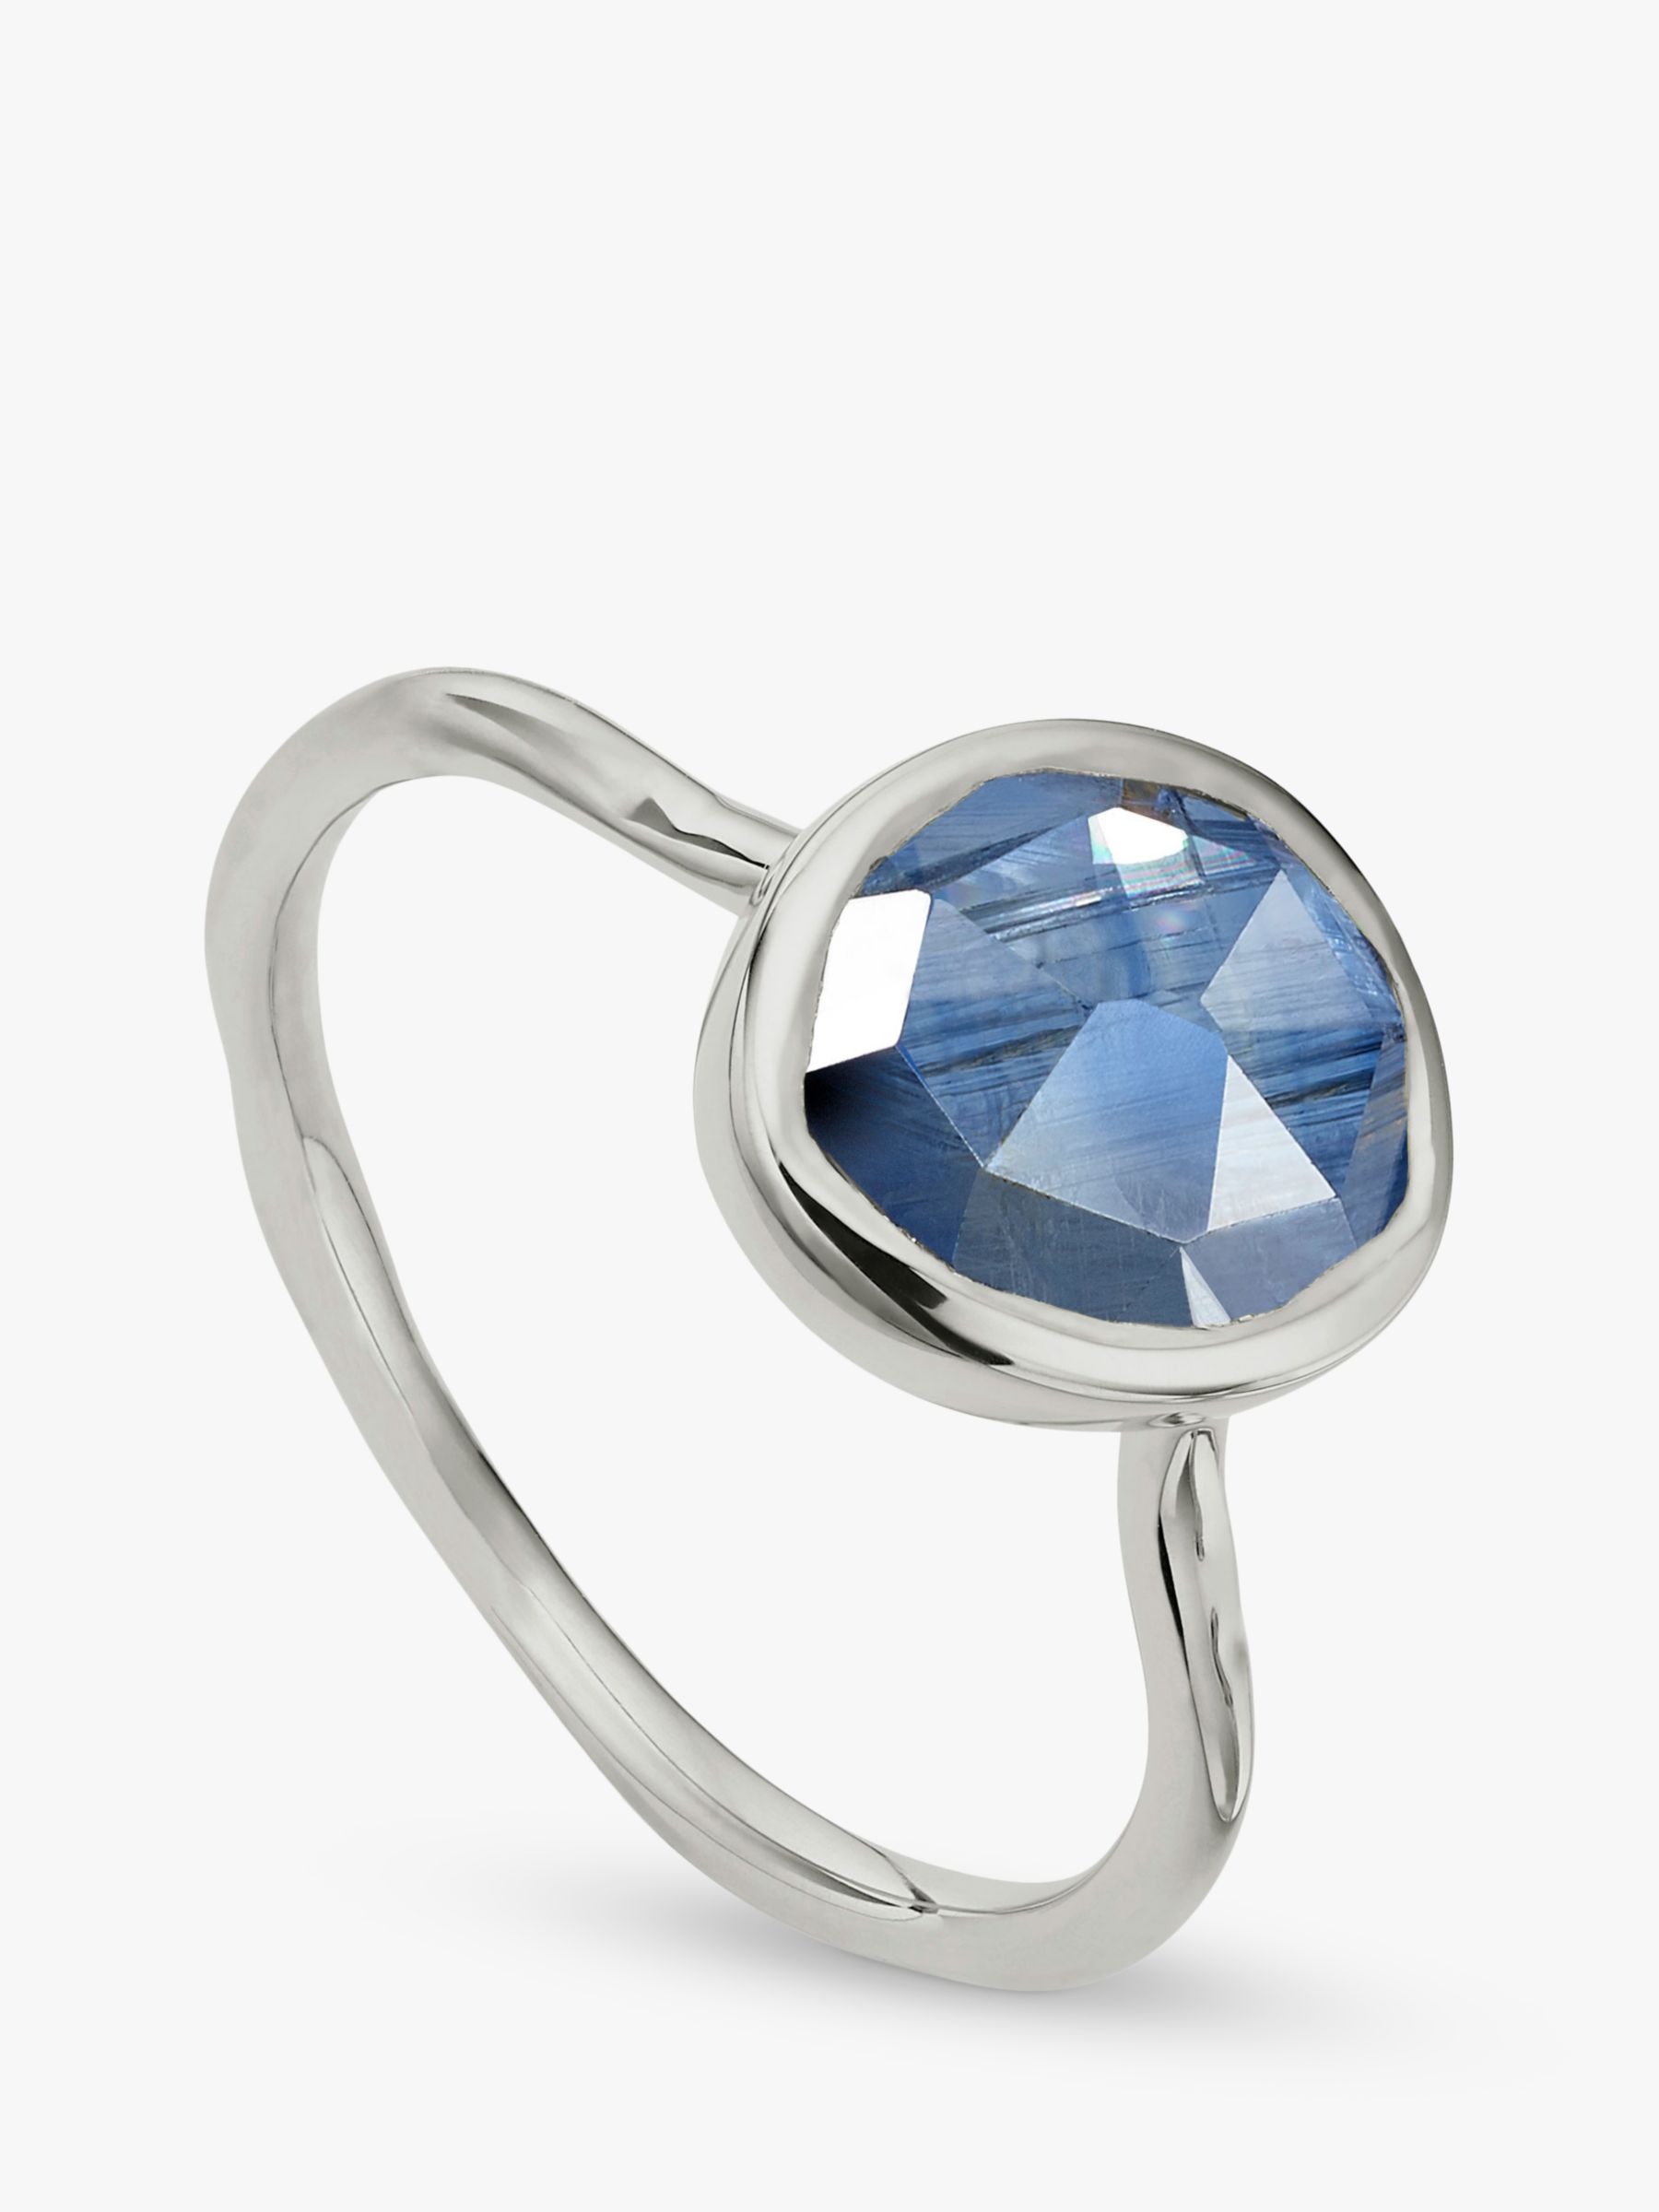 Monica Vinader Siren Kyanite Stacking Ring, Silver/Blue, S